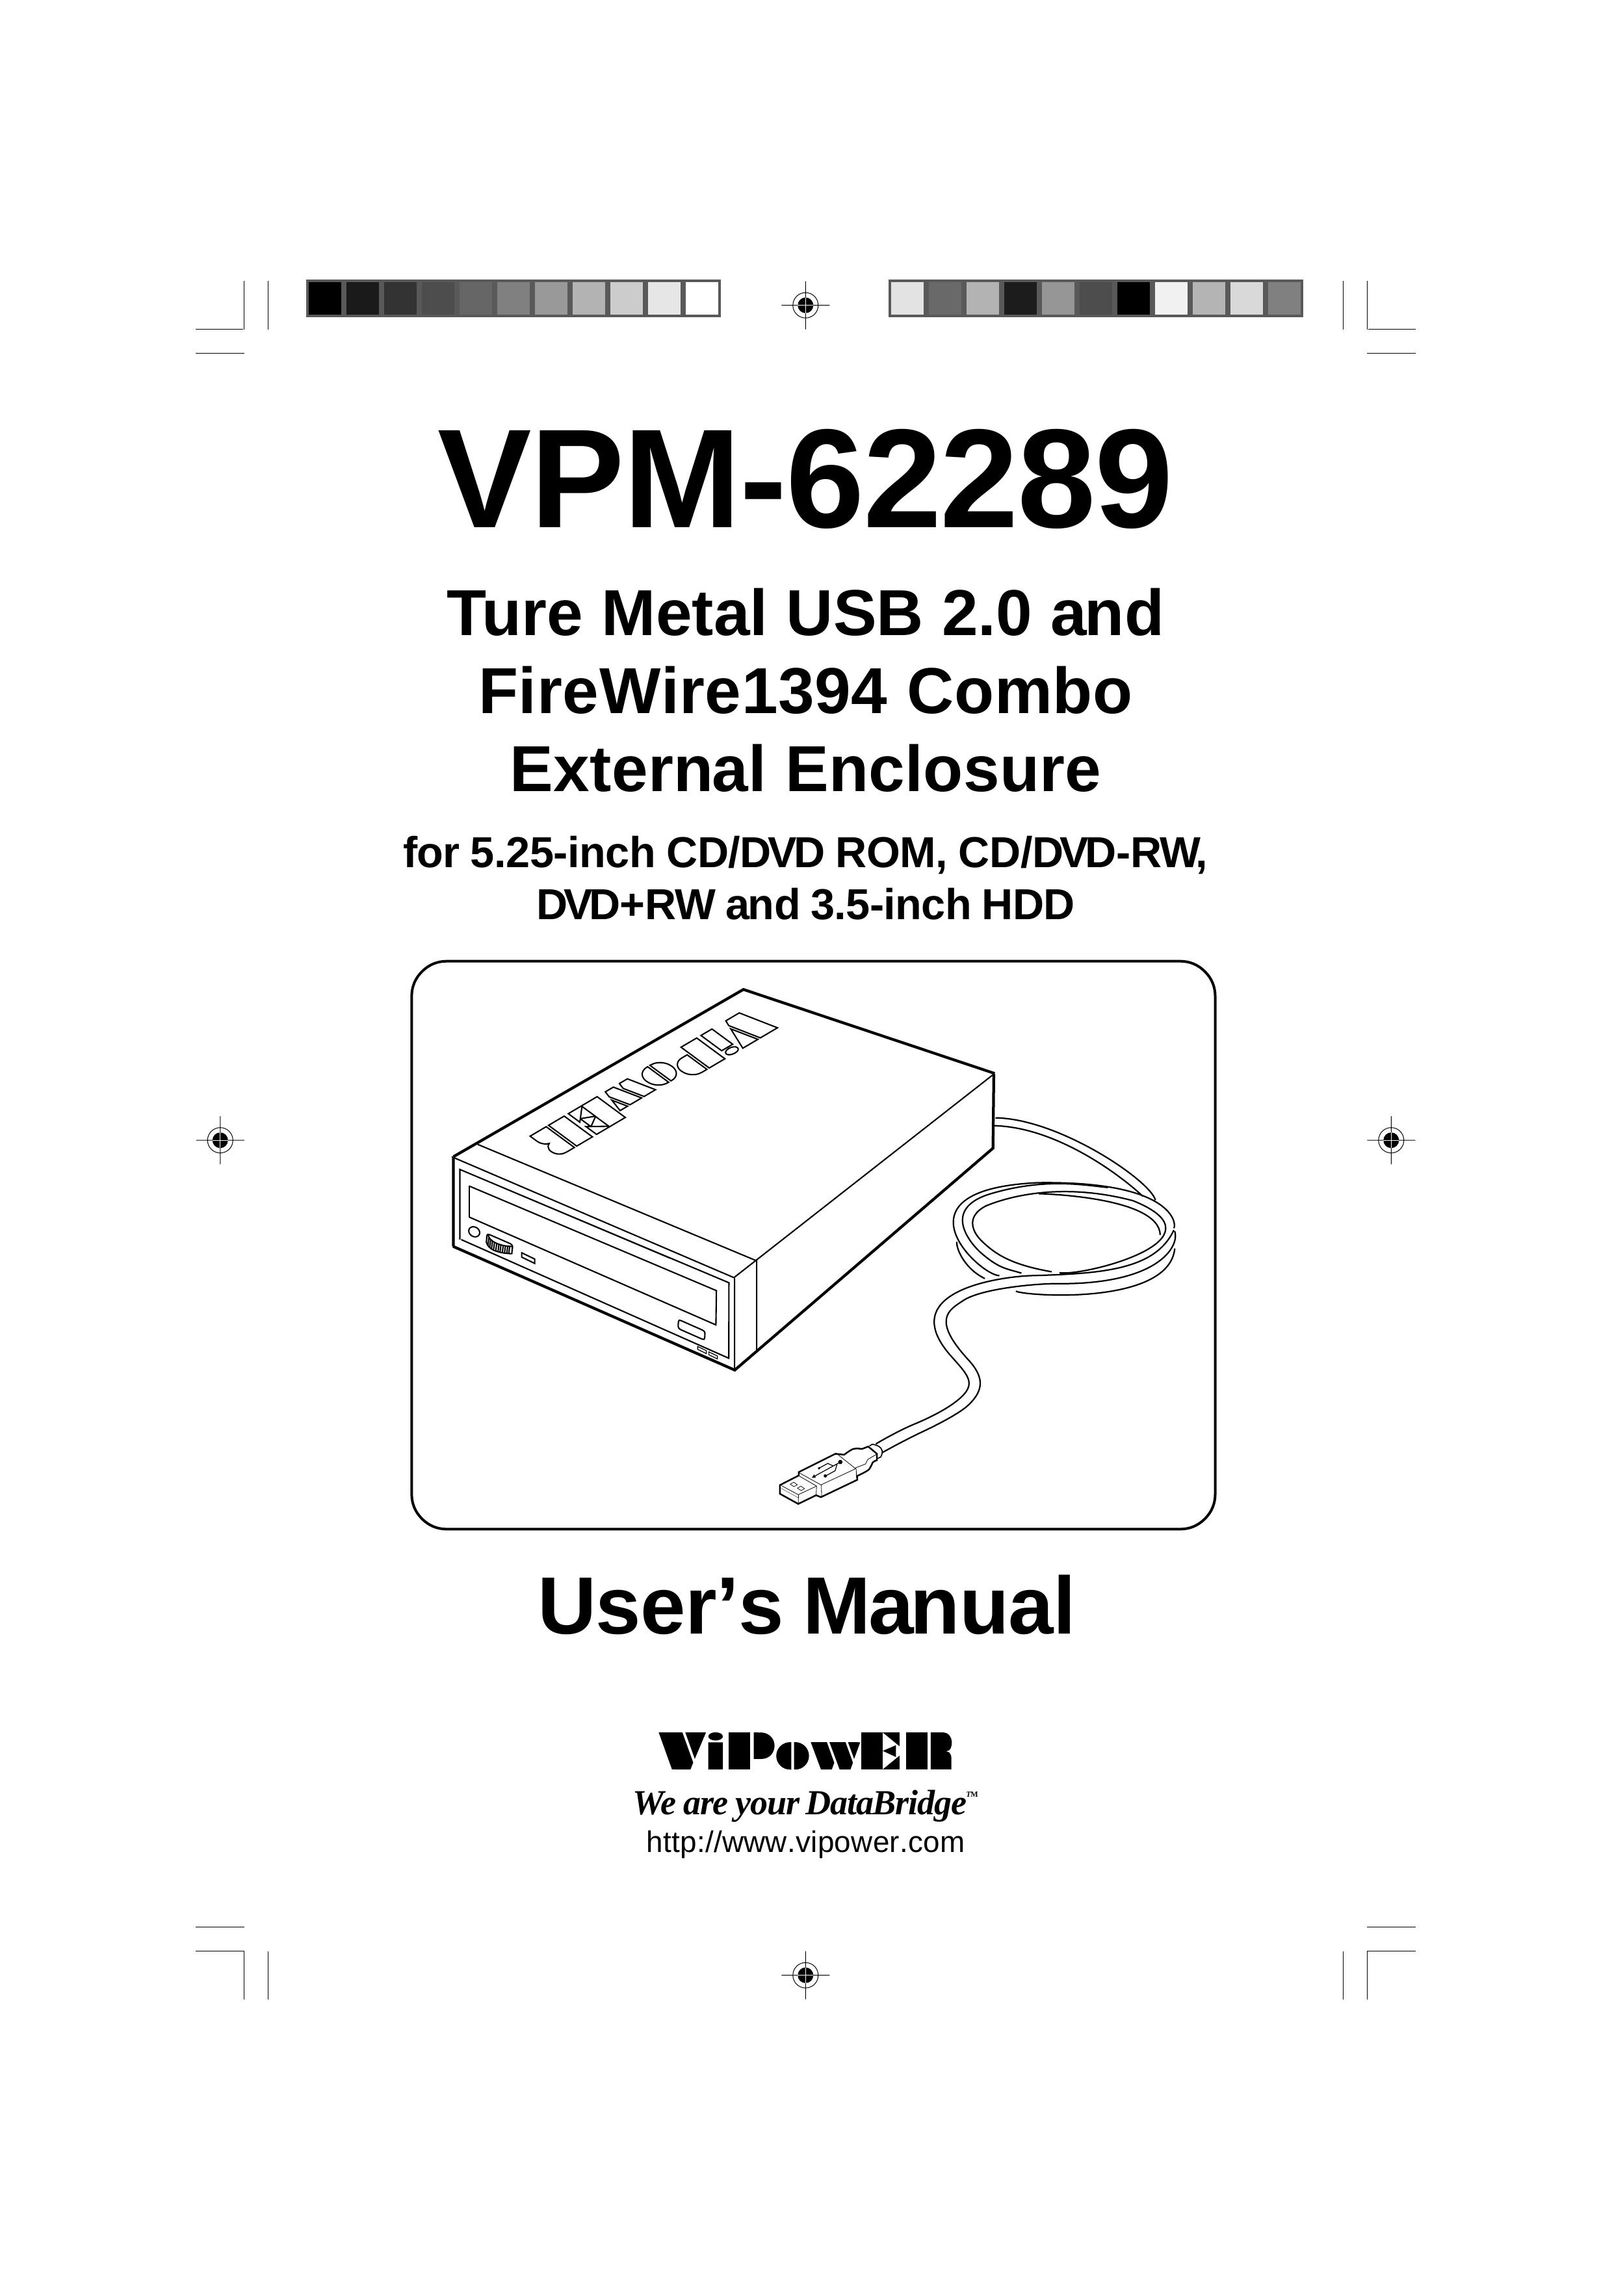 VIPowER VPM-62289 CD Player User Manual